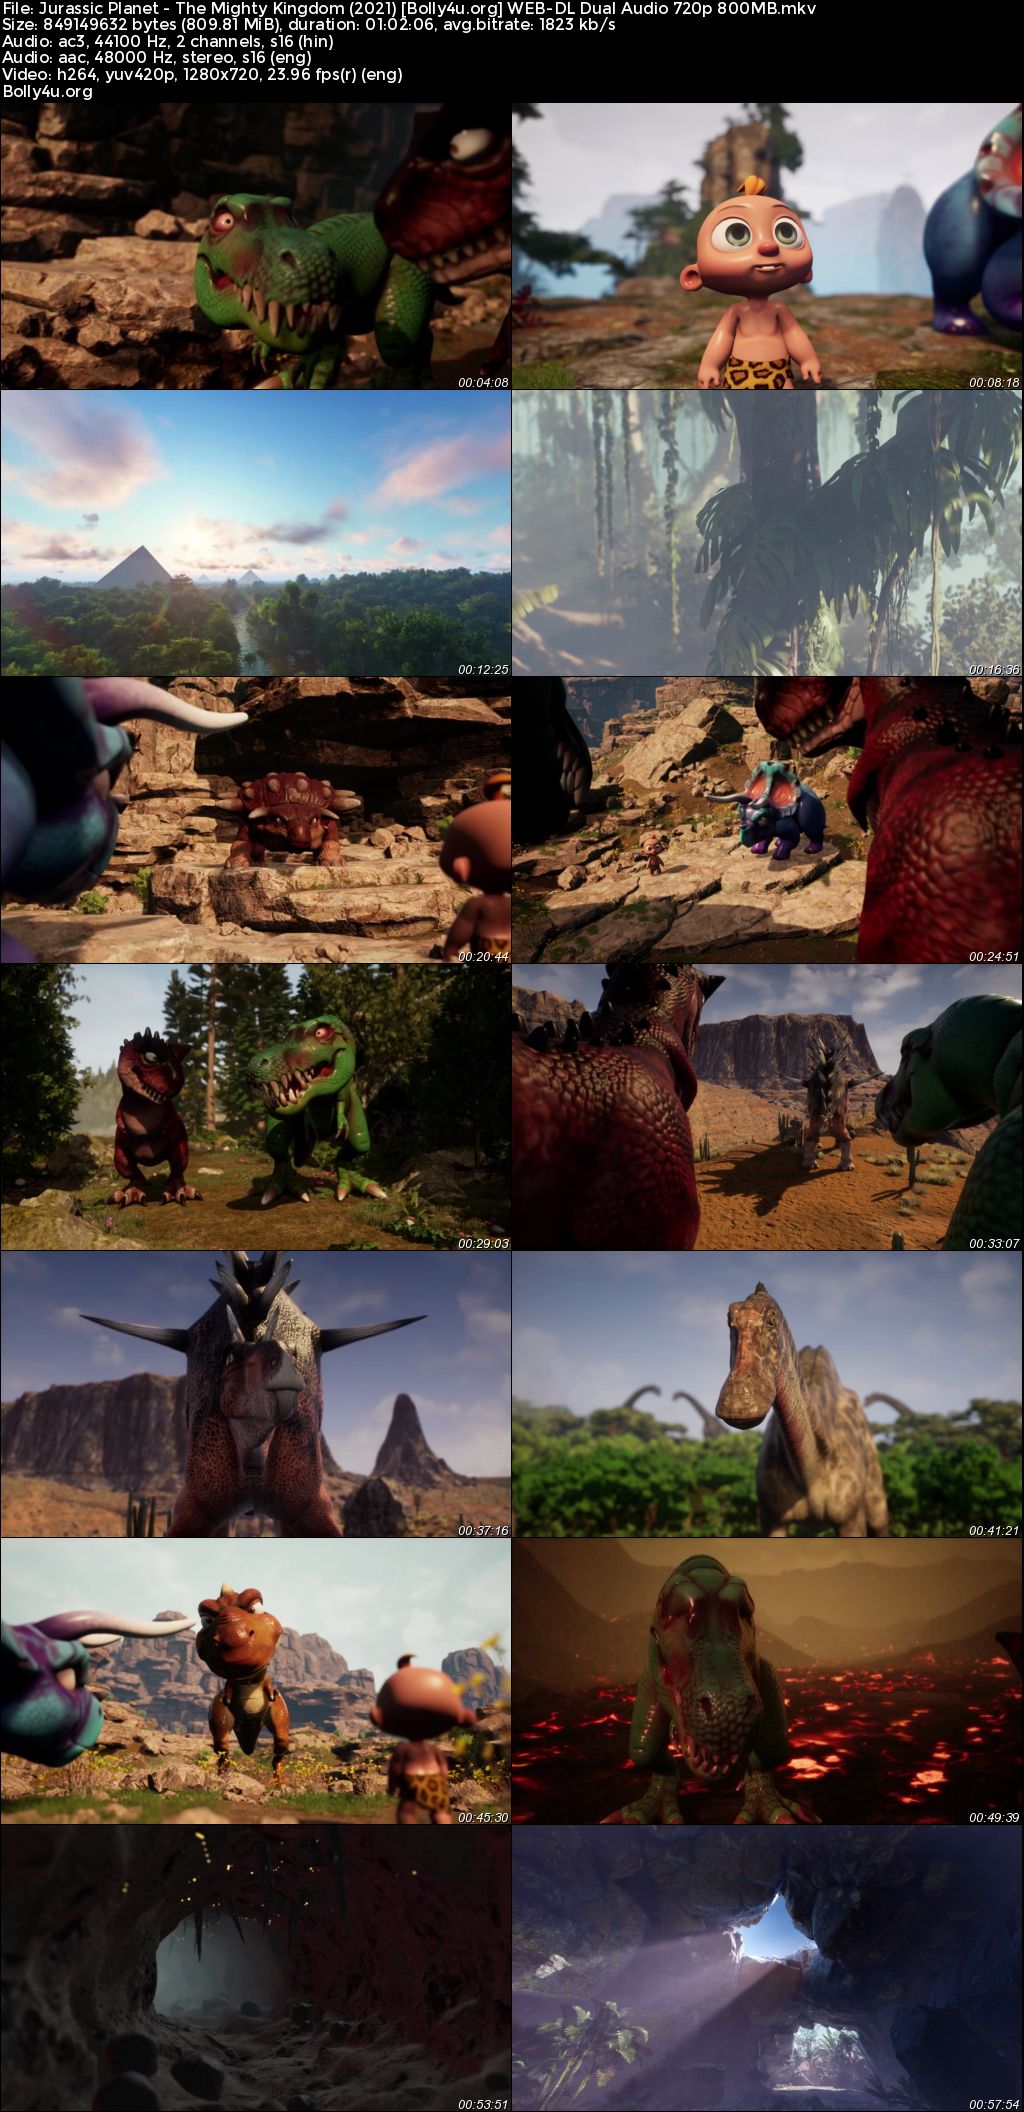 Jurassic Planet The Mighty Kingdom 2021 WEB-DL Hindi Dual Audio Full Movie Download 720p 480p